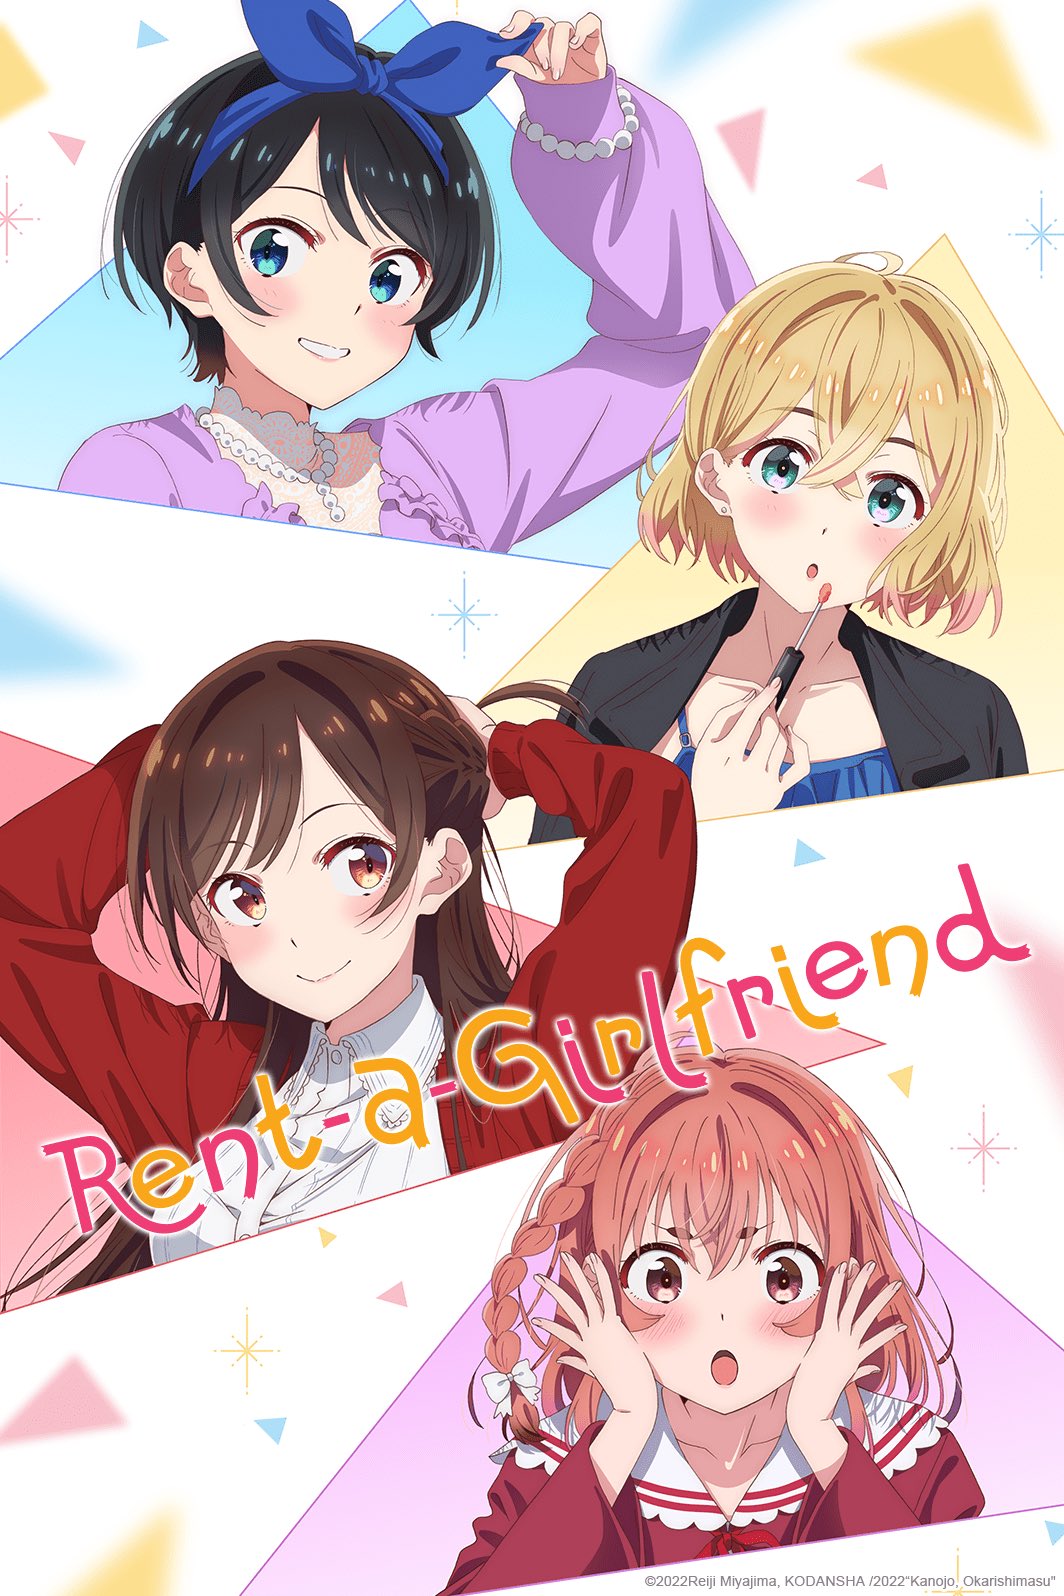 Summer Days Are Fun in Girlfriend, Girlfriend Season 2 Anime Creditless  Opening and Ending Theme Videos - Crunchyroll News